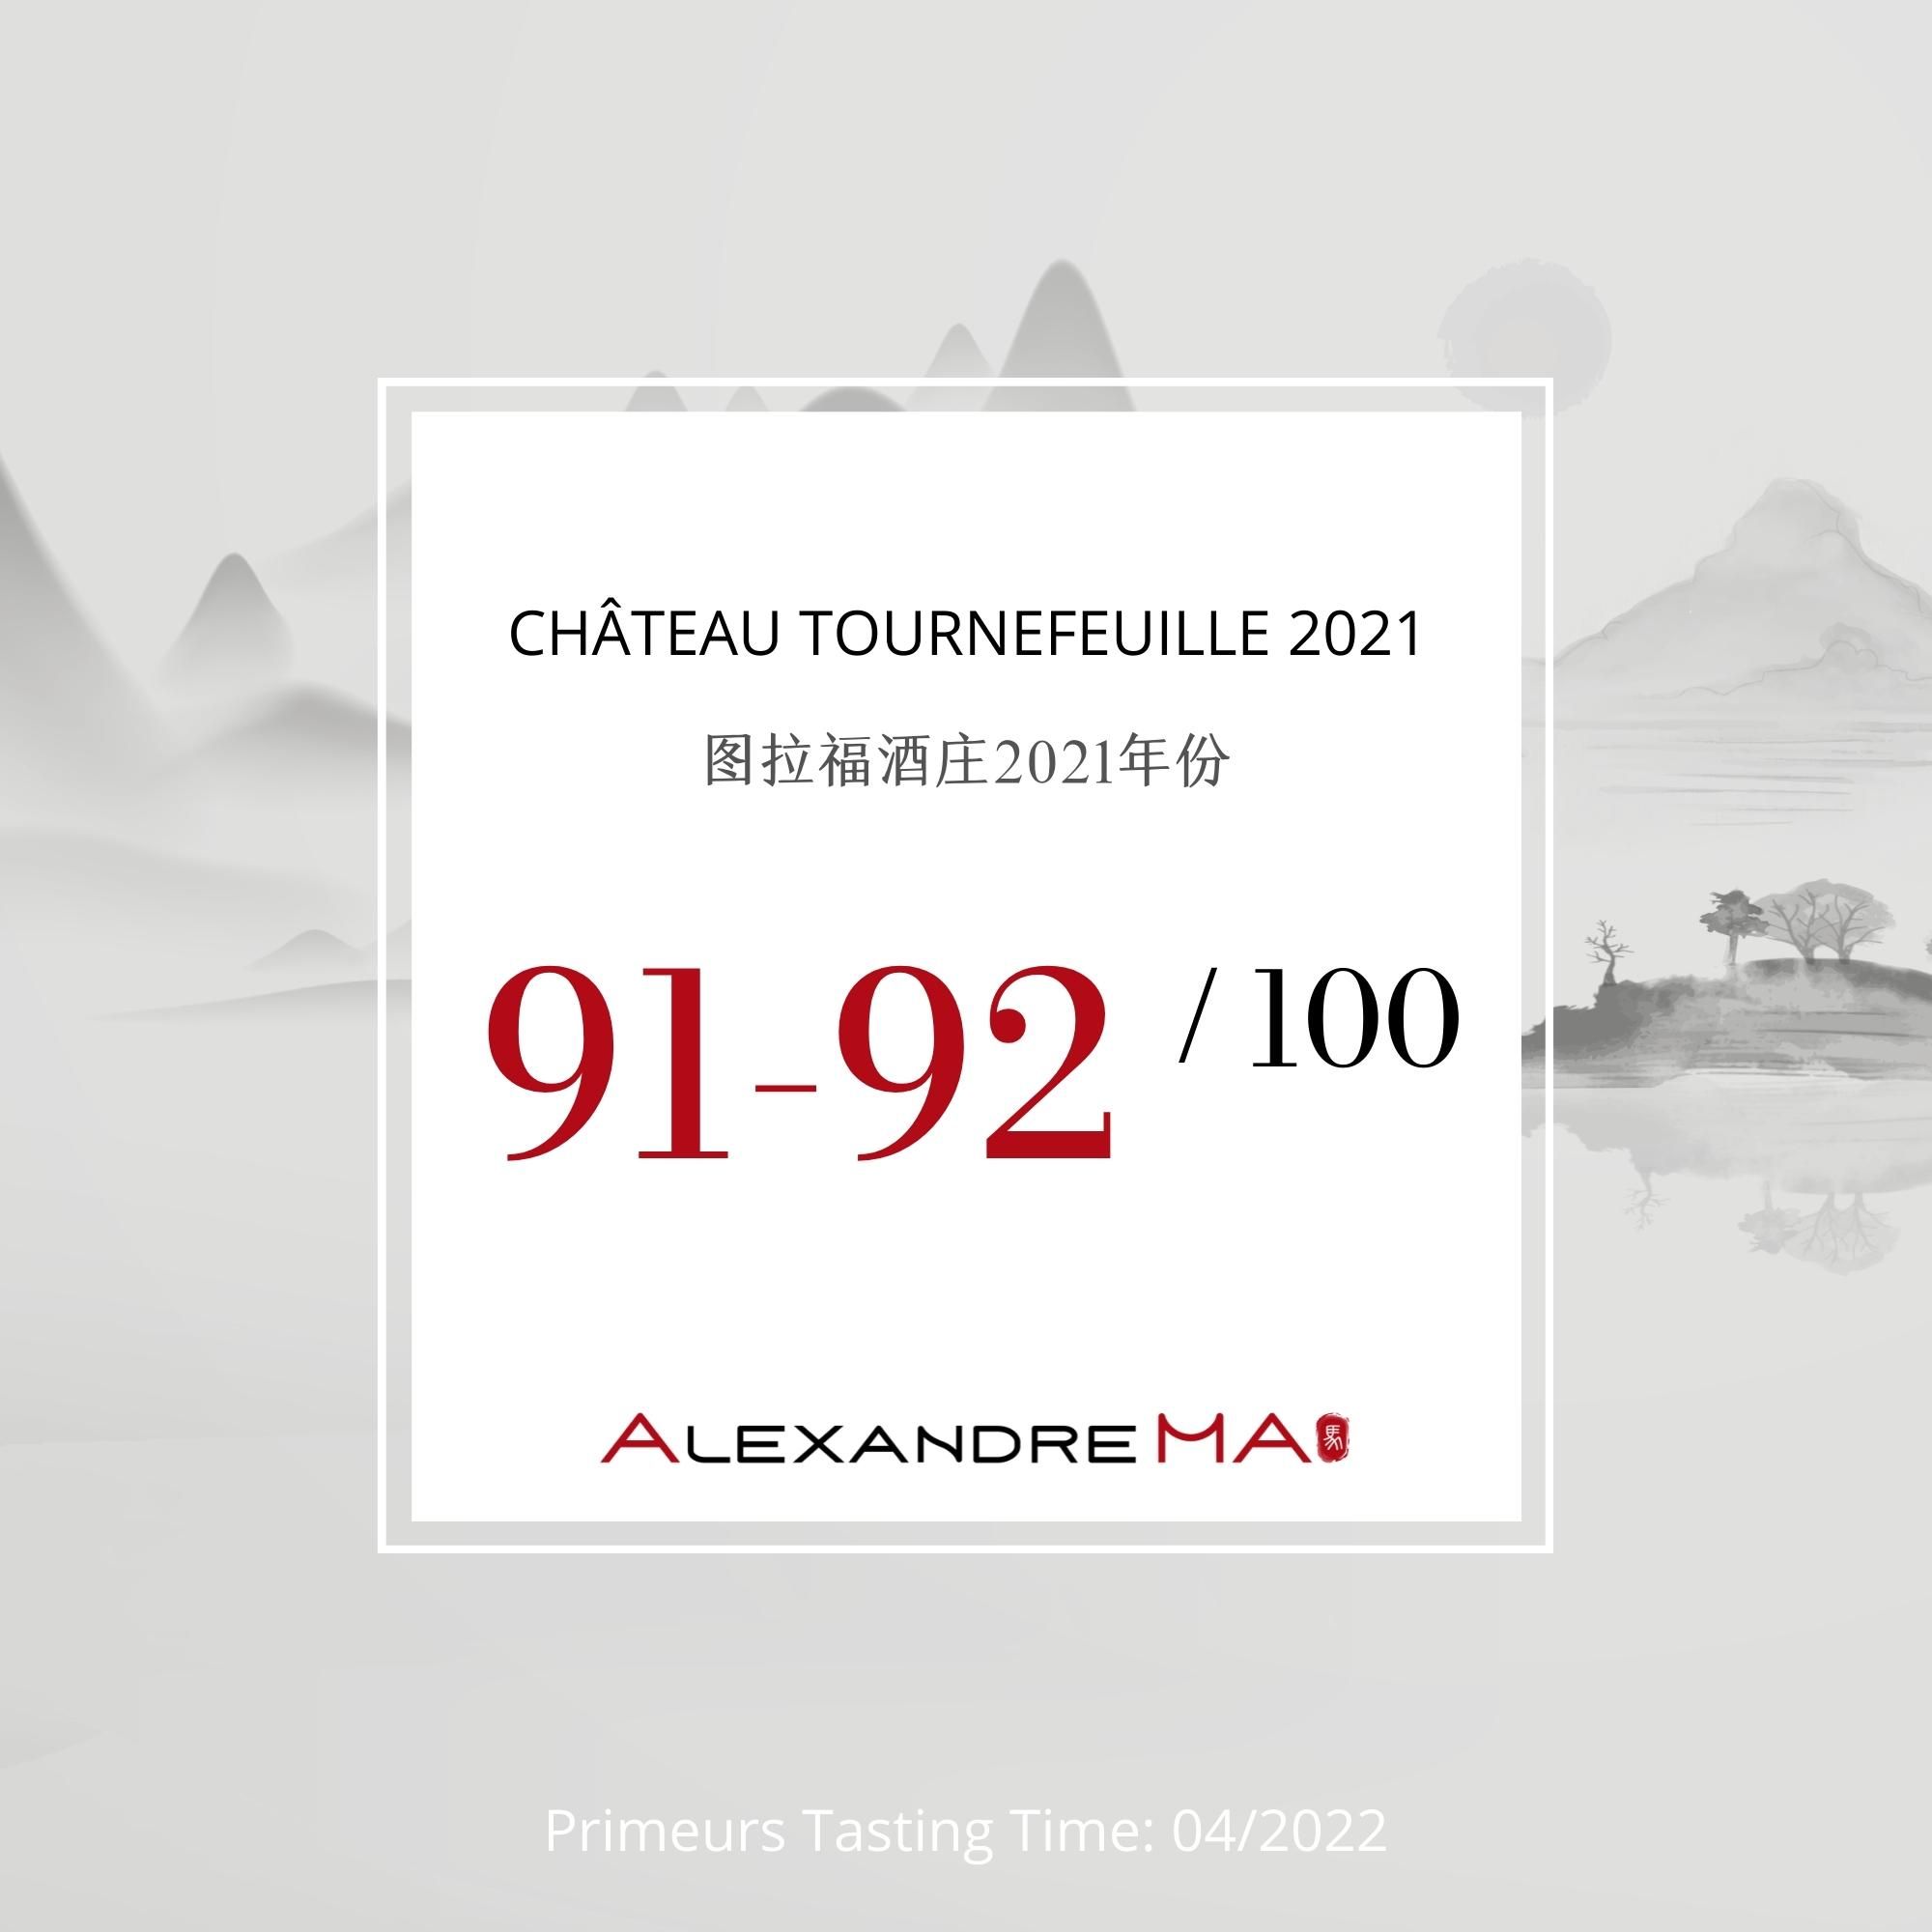 Château Tournefeuille 2021 - Alexandre MA